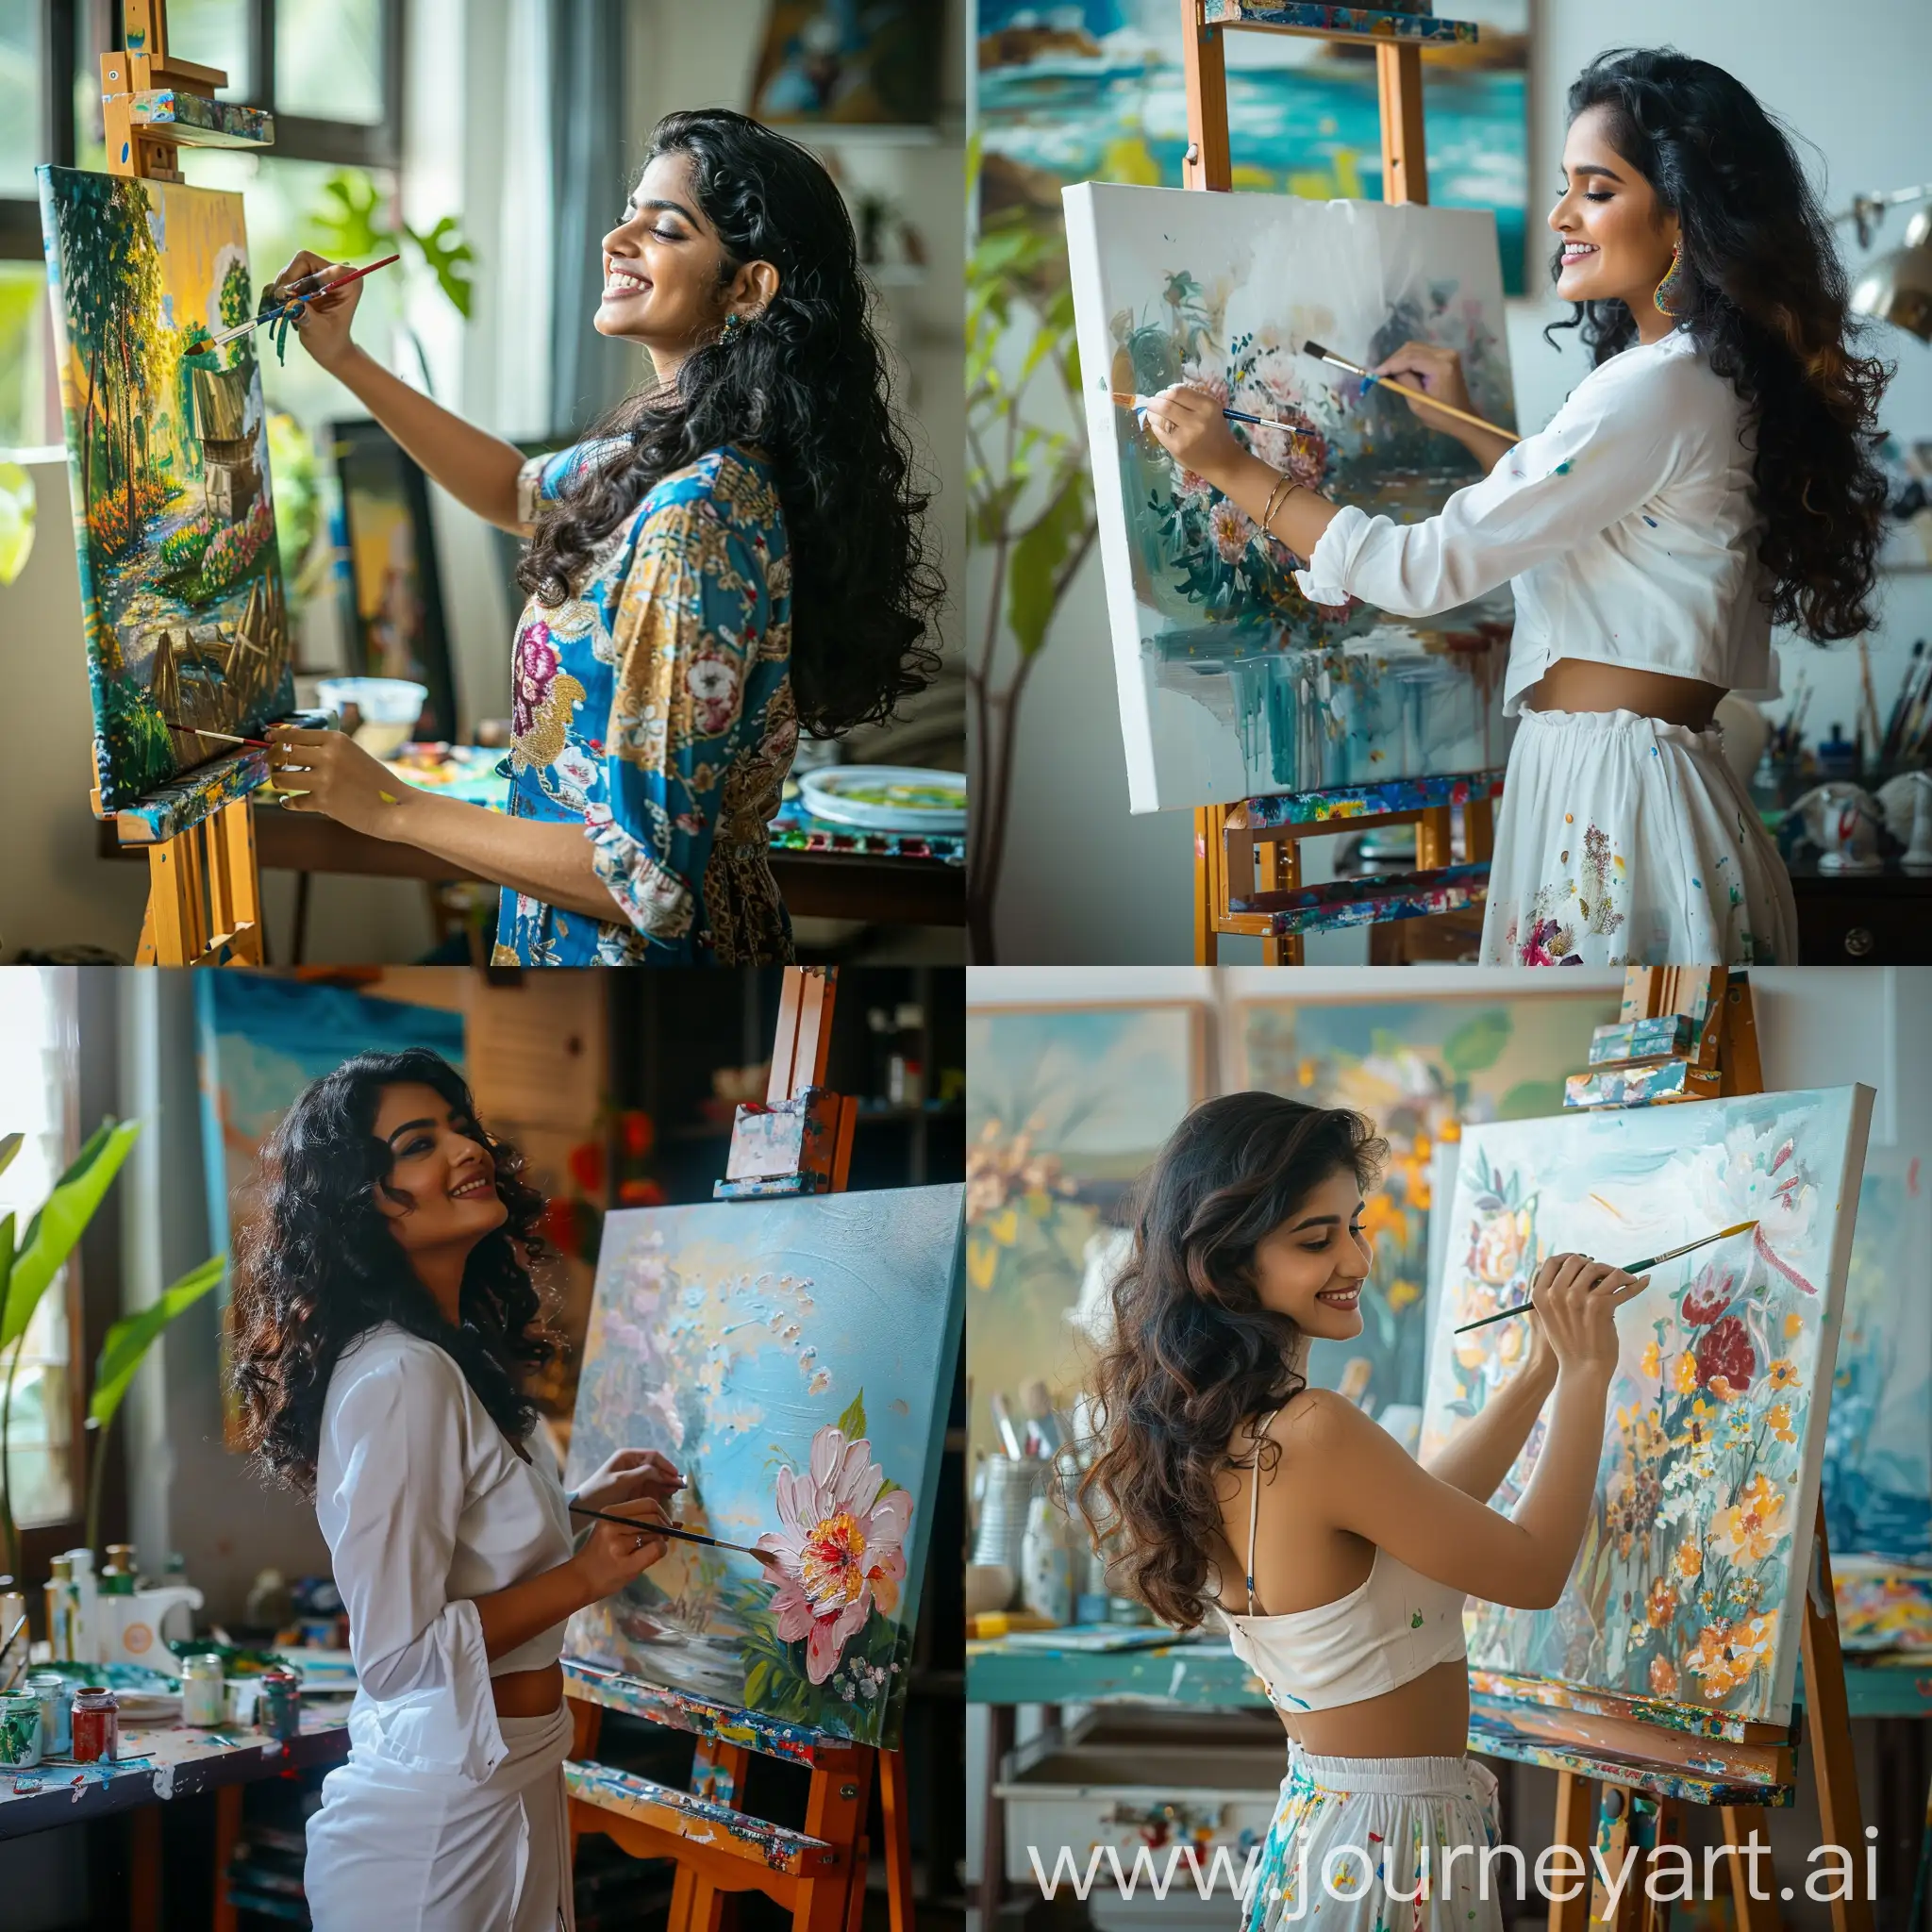 Joyful-Kerala-Female-Artist-Painting-in-Home-Studio